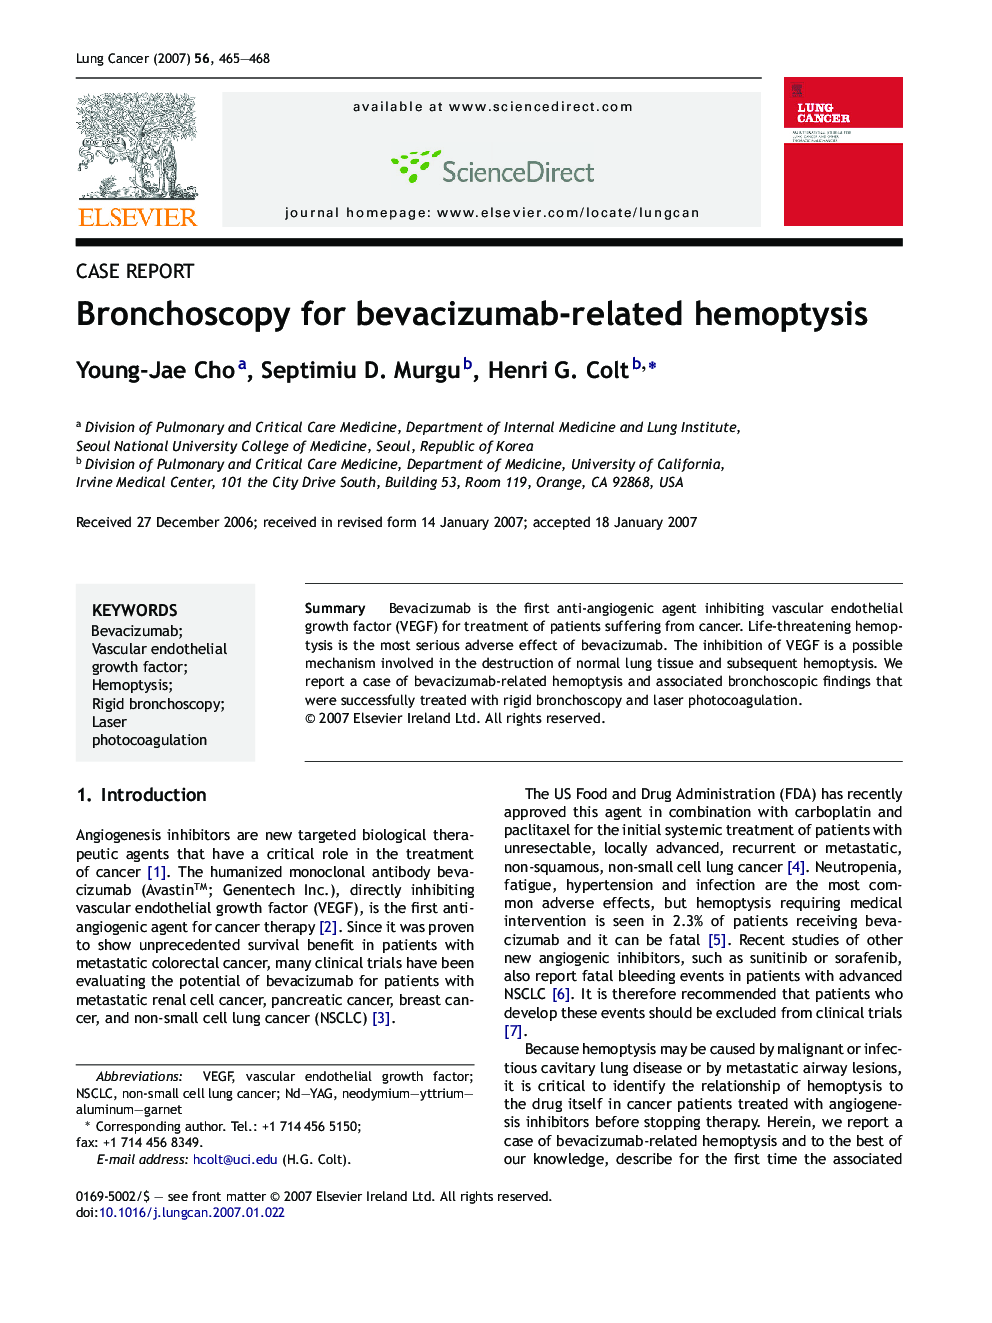 Bronchoscopy for bevacizumab-related hemoptysis